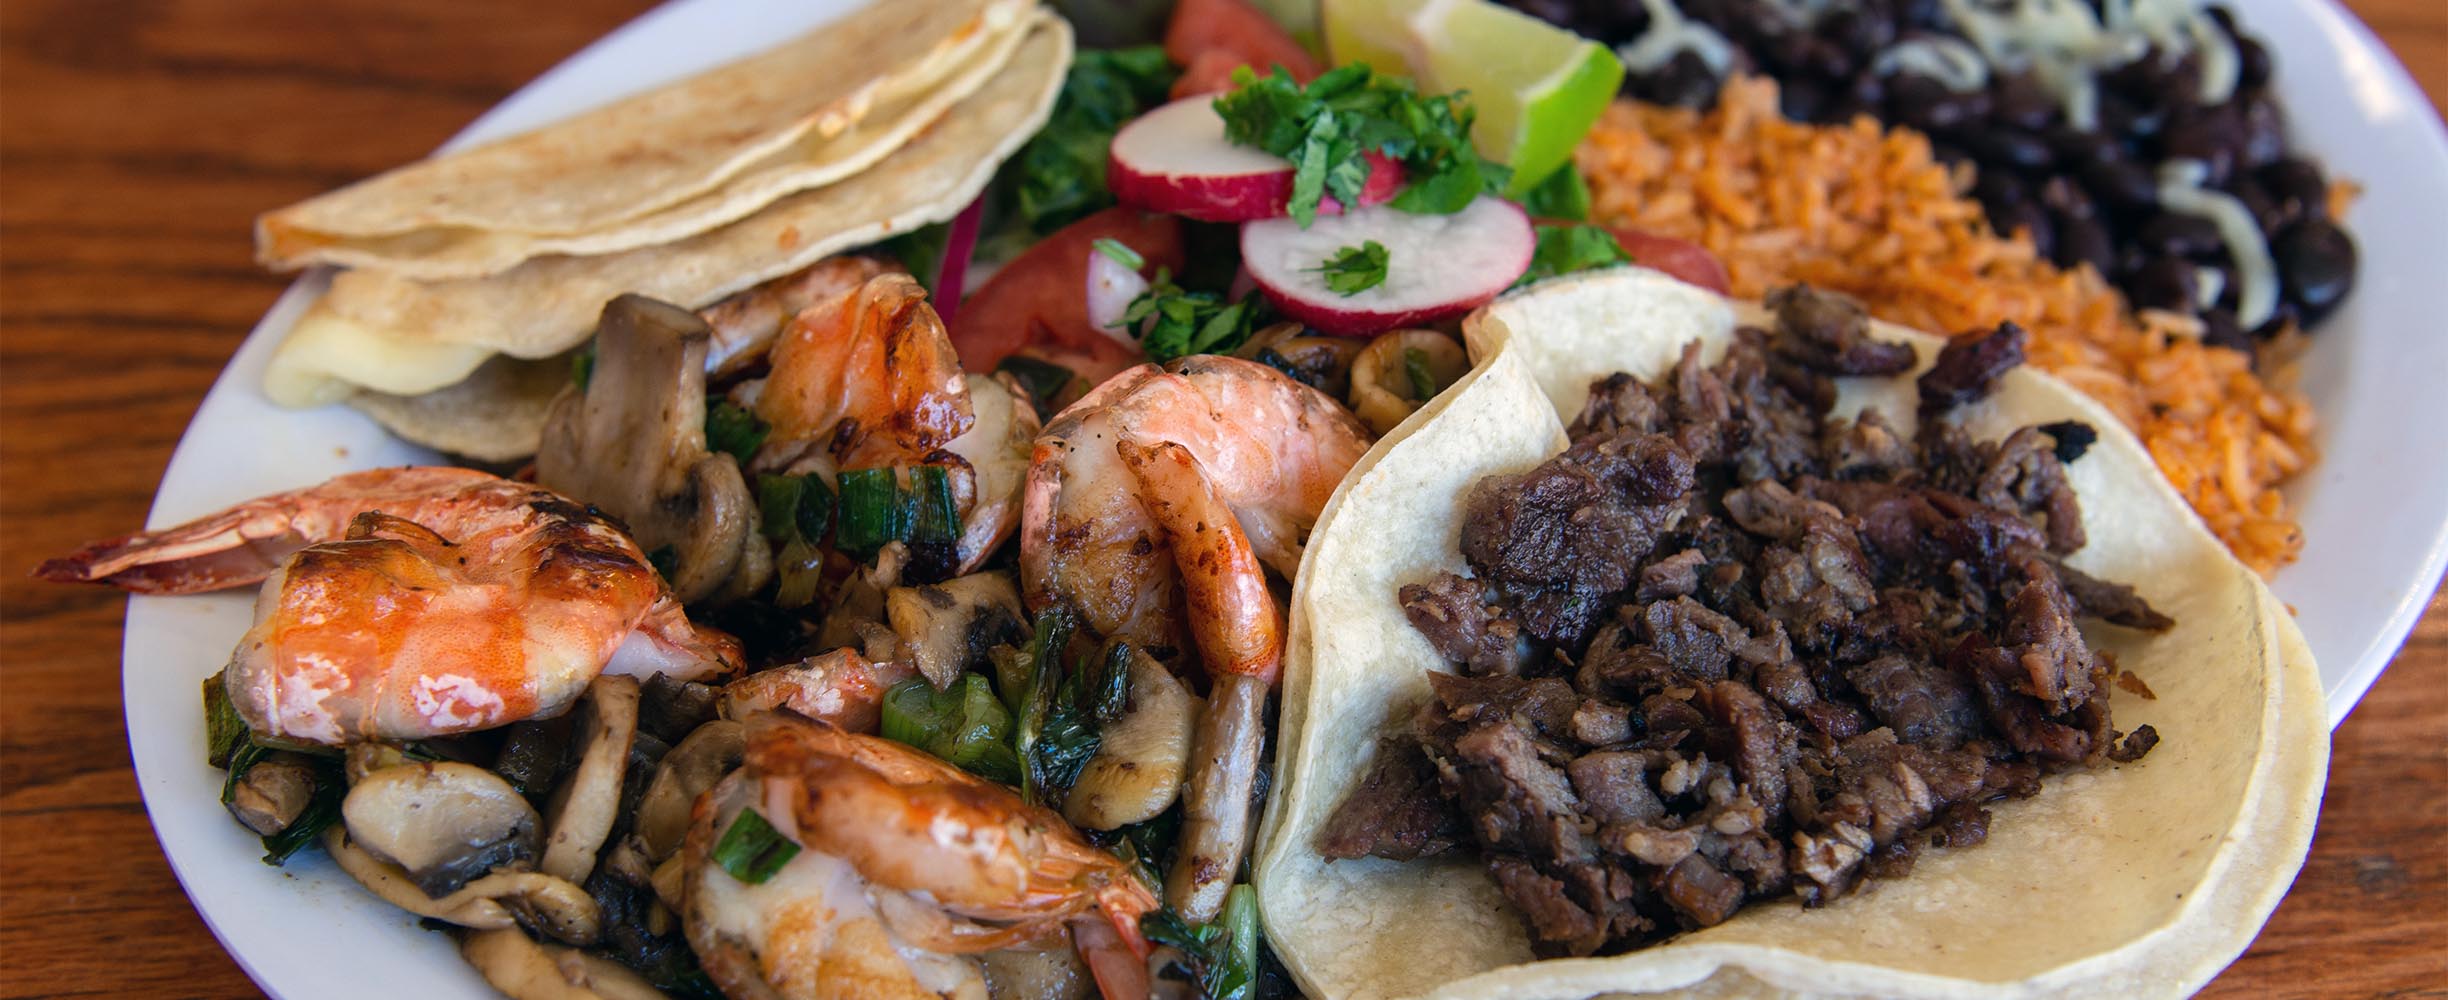 Mexican camarones (shrimp) and meat platter in San Francisco, California 